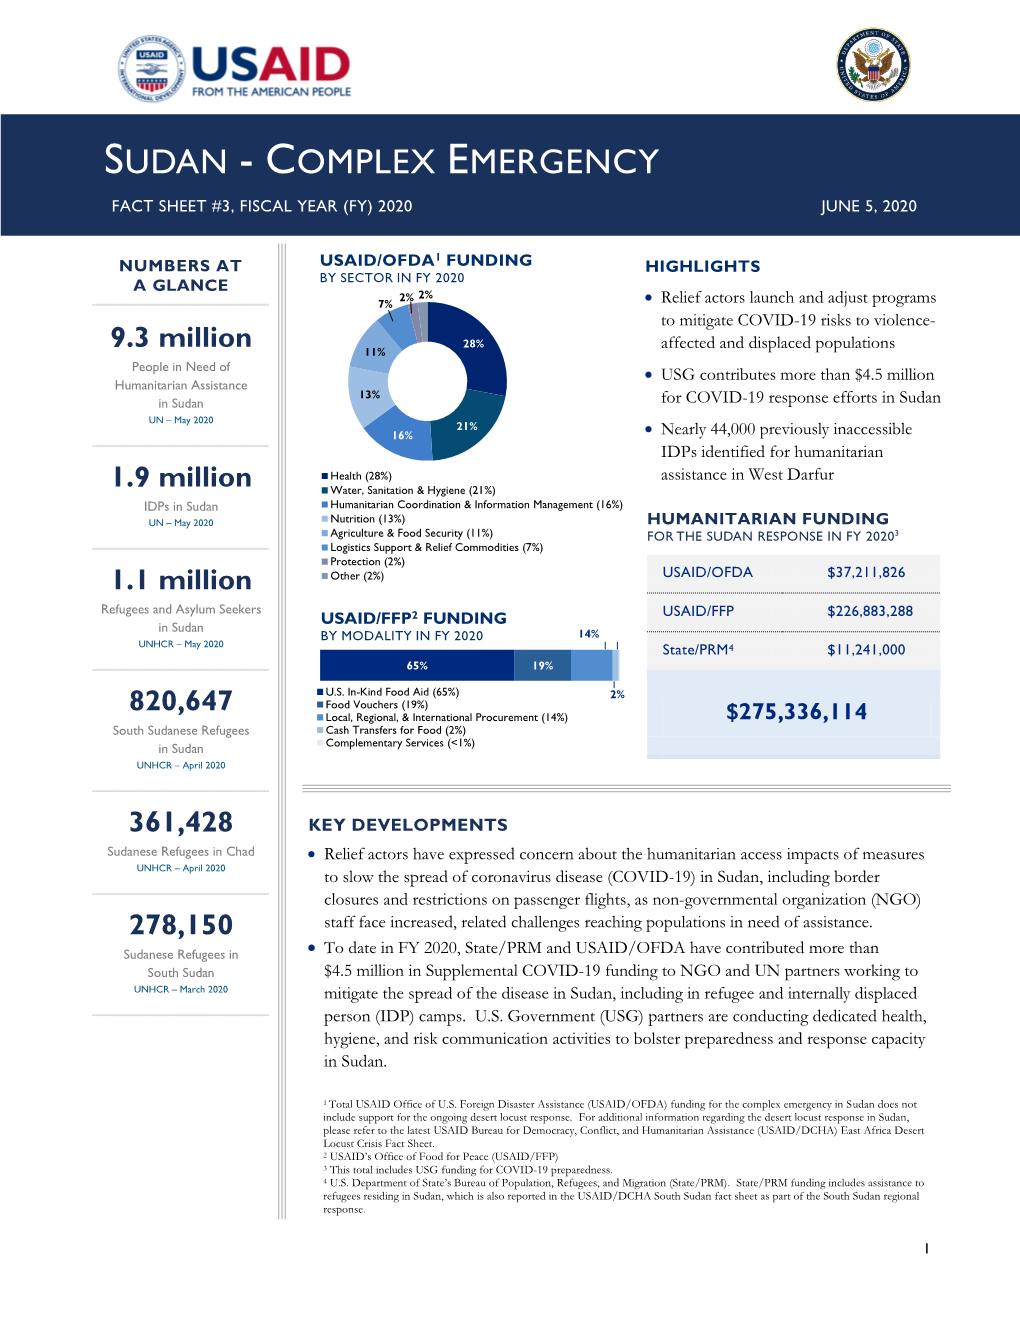 Sudan Complex Emergency Fact Sheet 3 06-05-2020